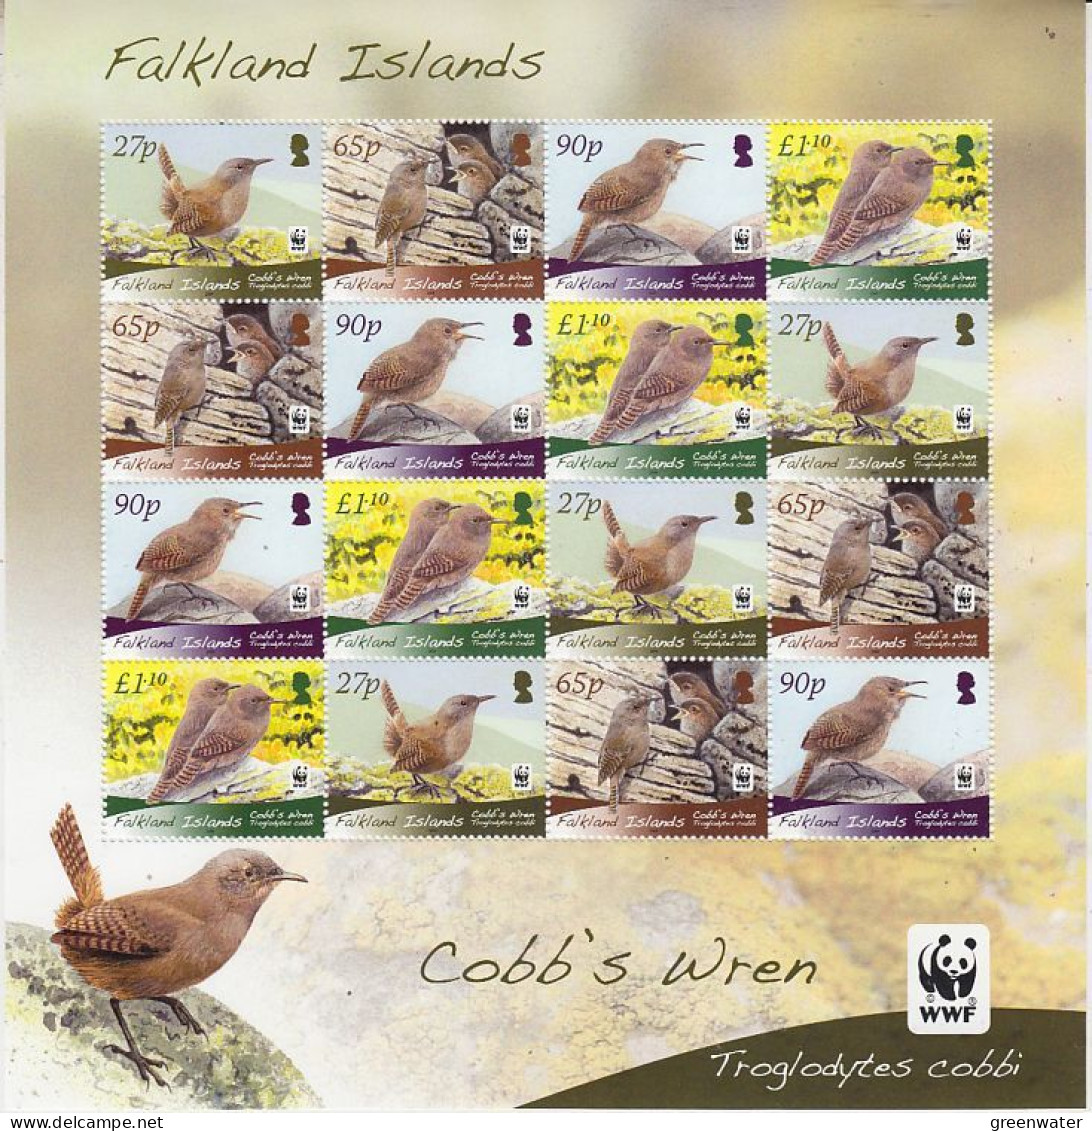 Falkland Islands 2009 Cobb's Wren / WWF Sheetlet ** Mnh (FG196) - Falkland Islands